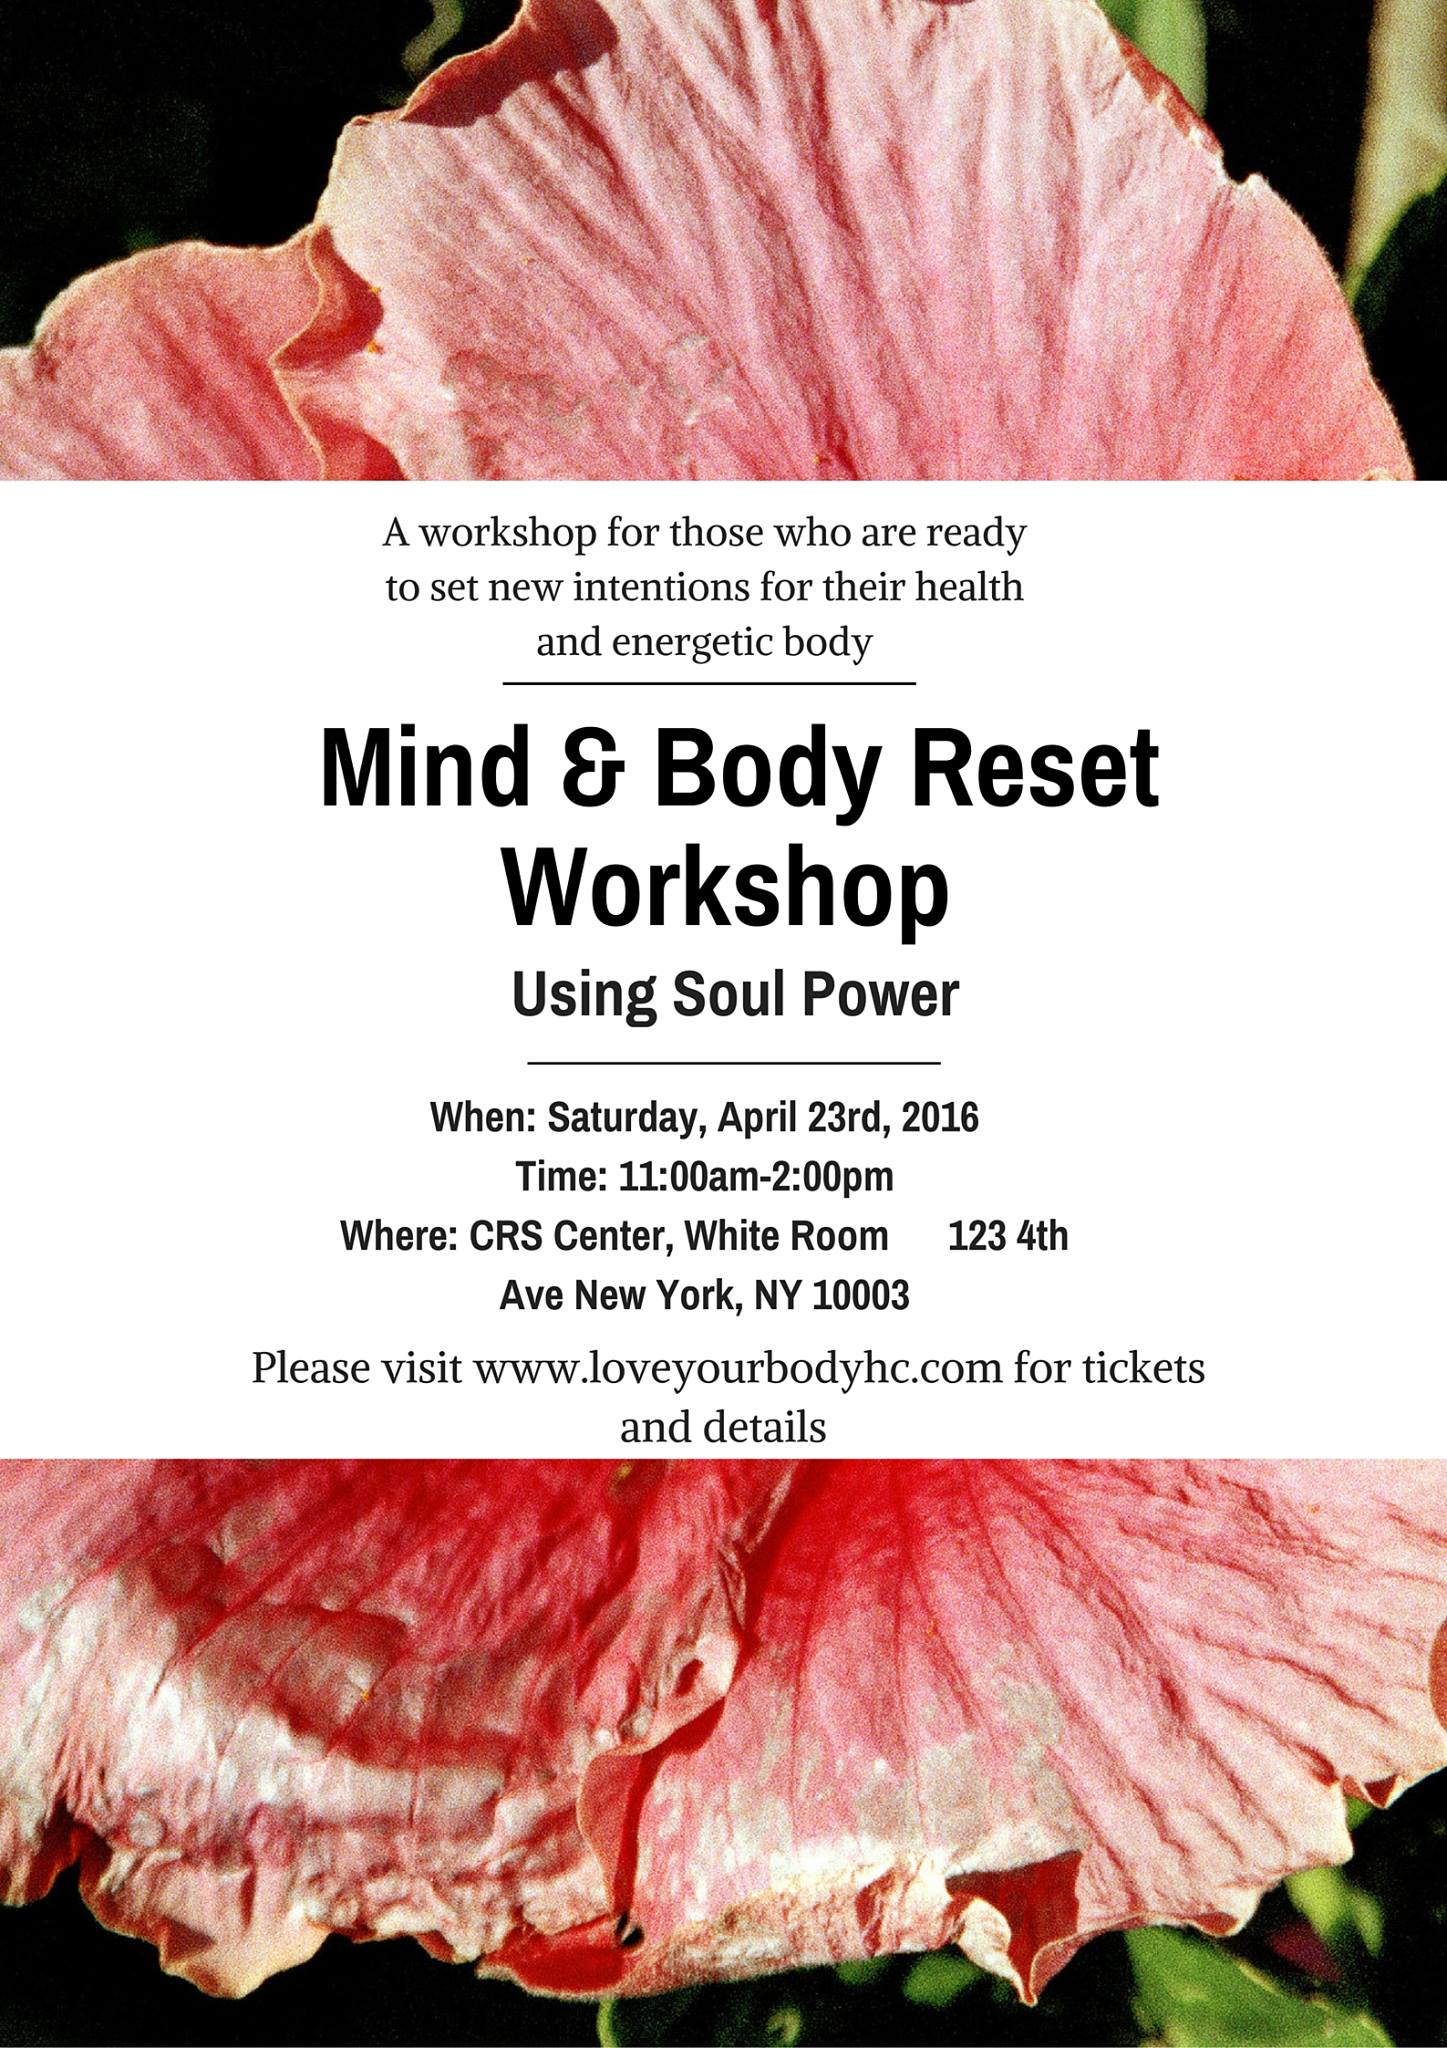 Mind & Body Reset Workshop 4/23/16